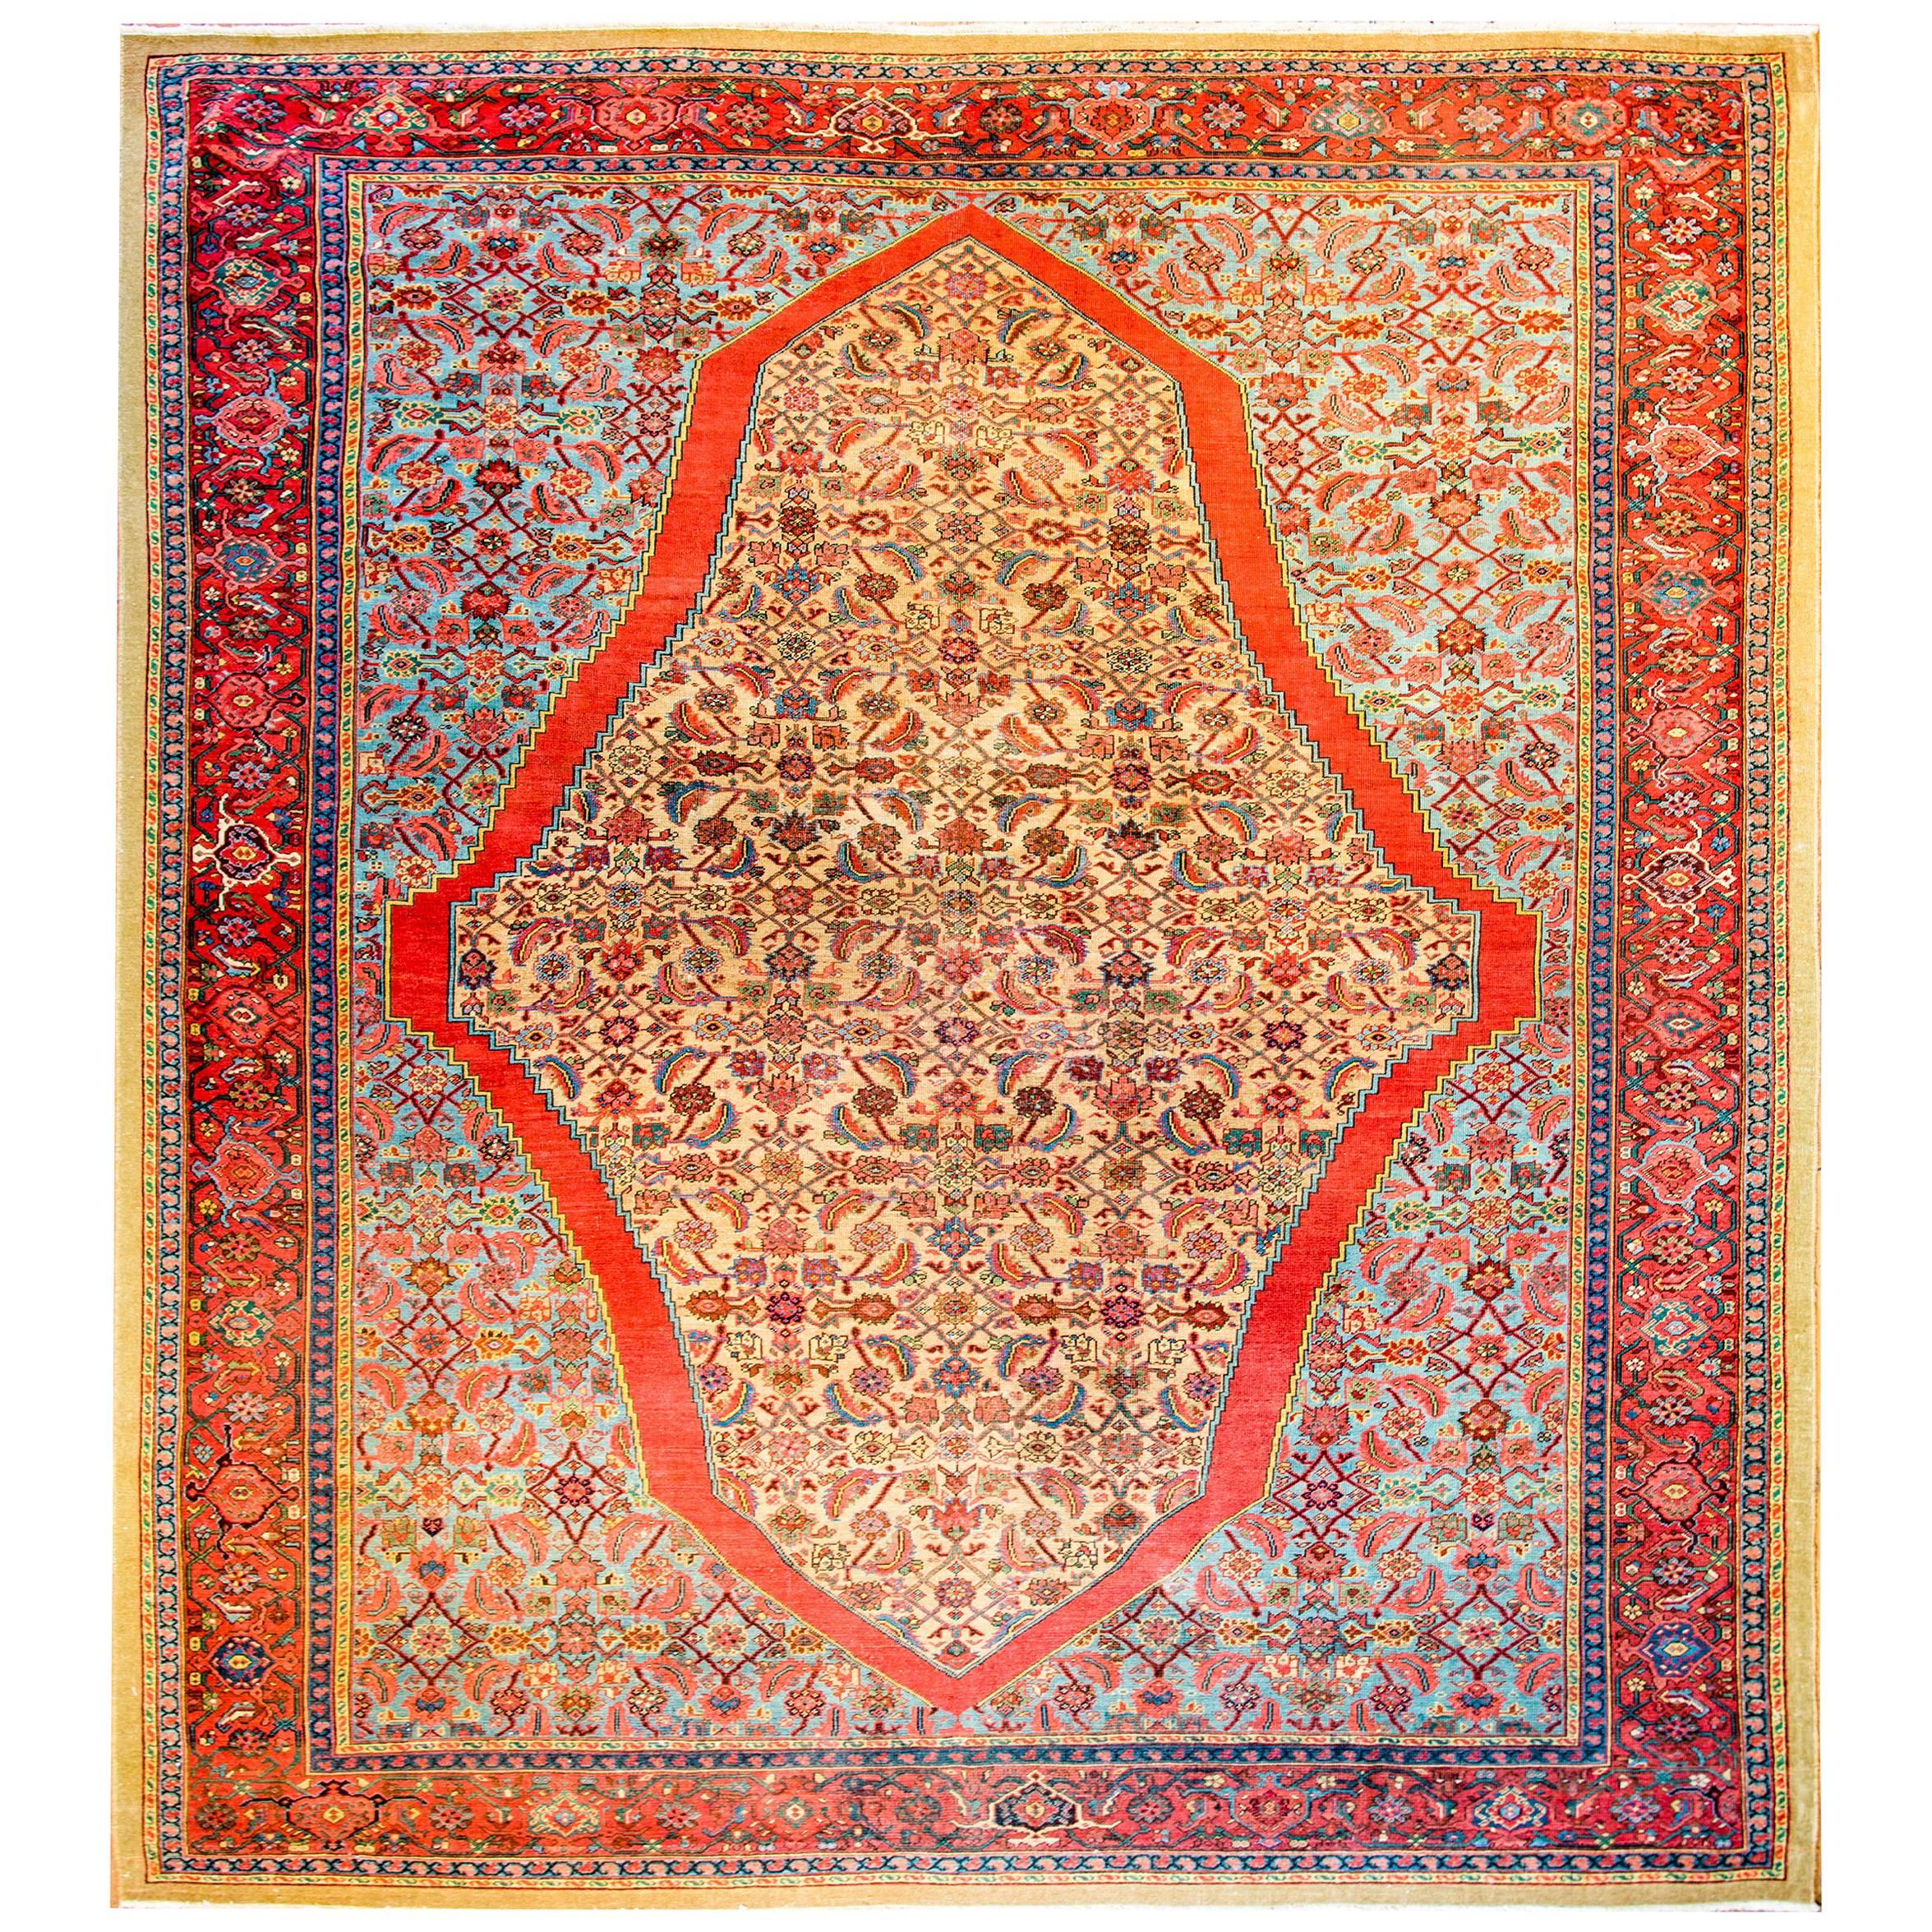 Incroyable tapis Bakshaish du début du XXe siècle